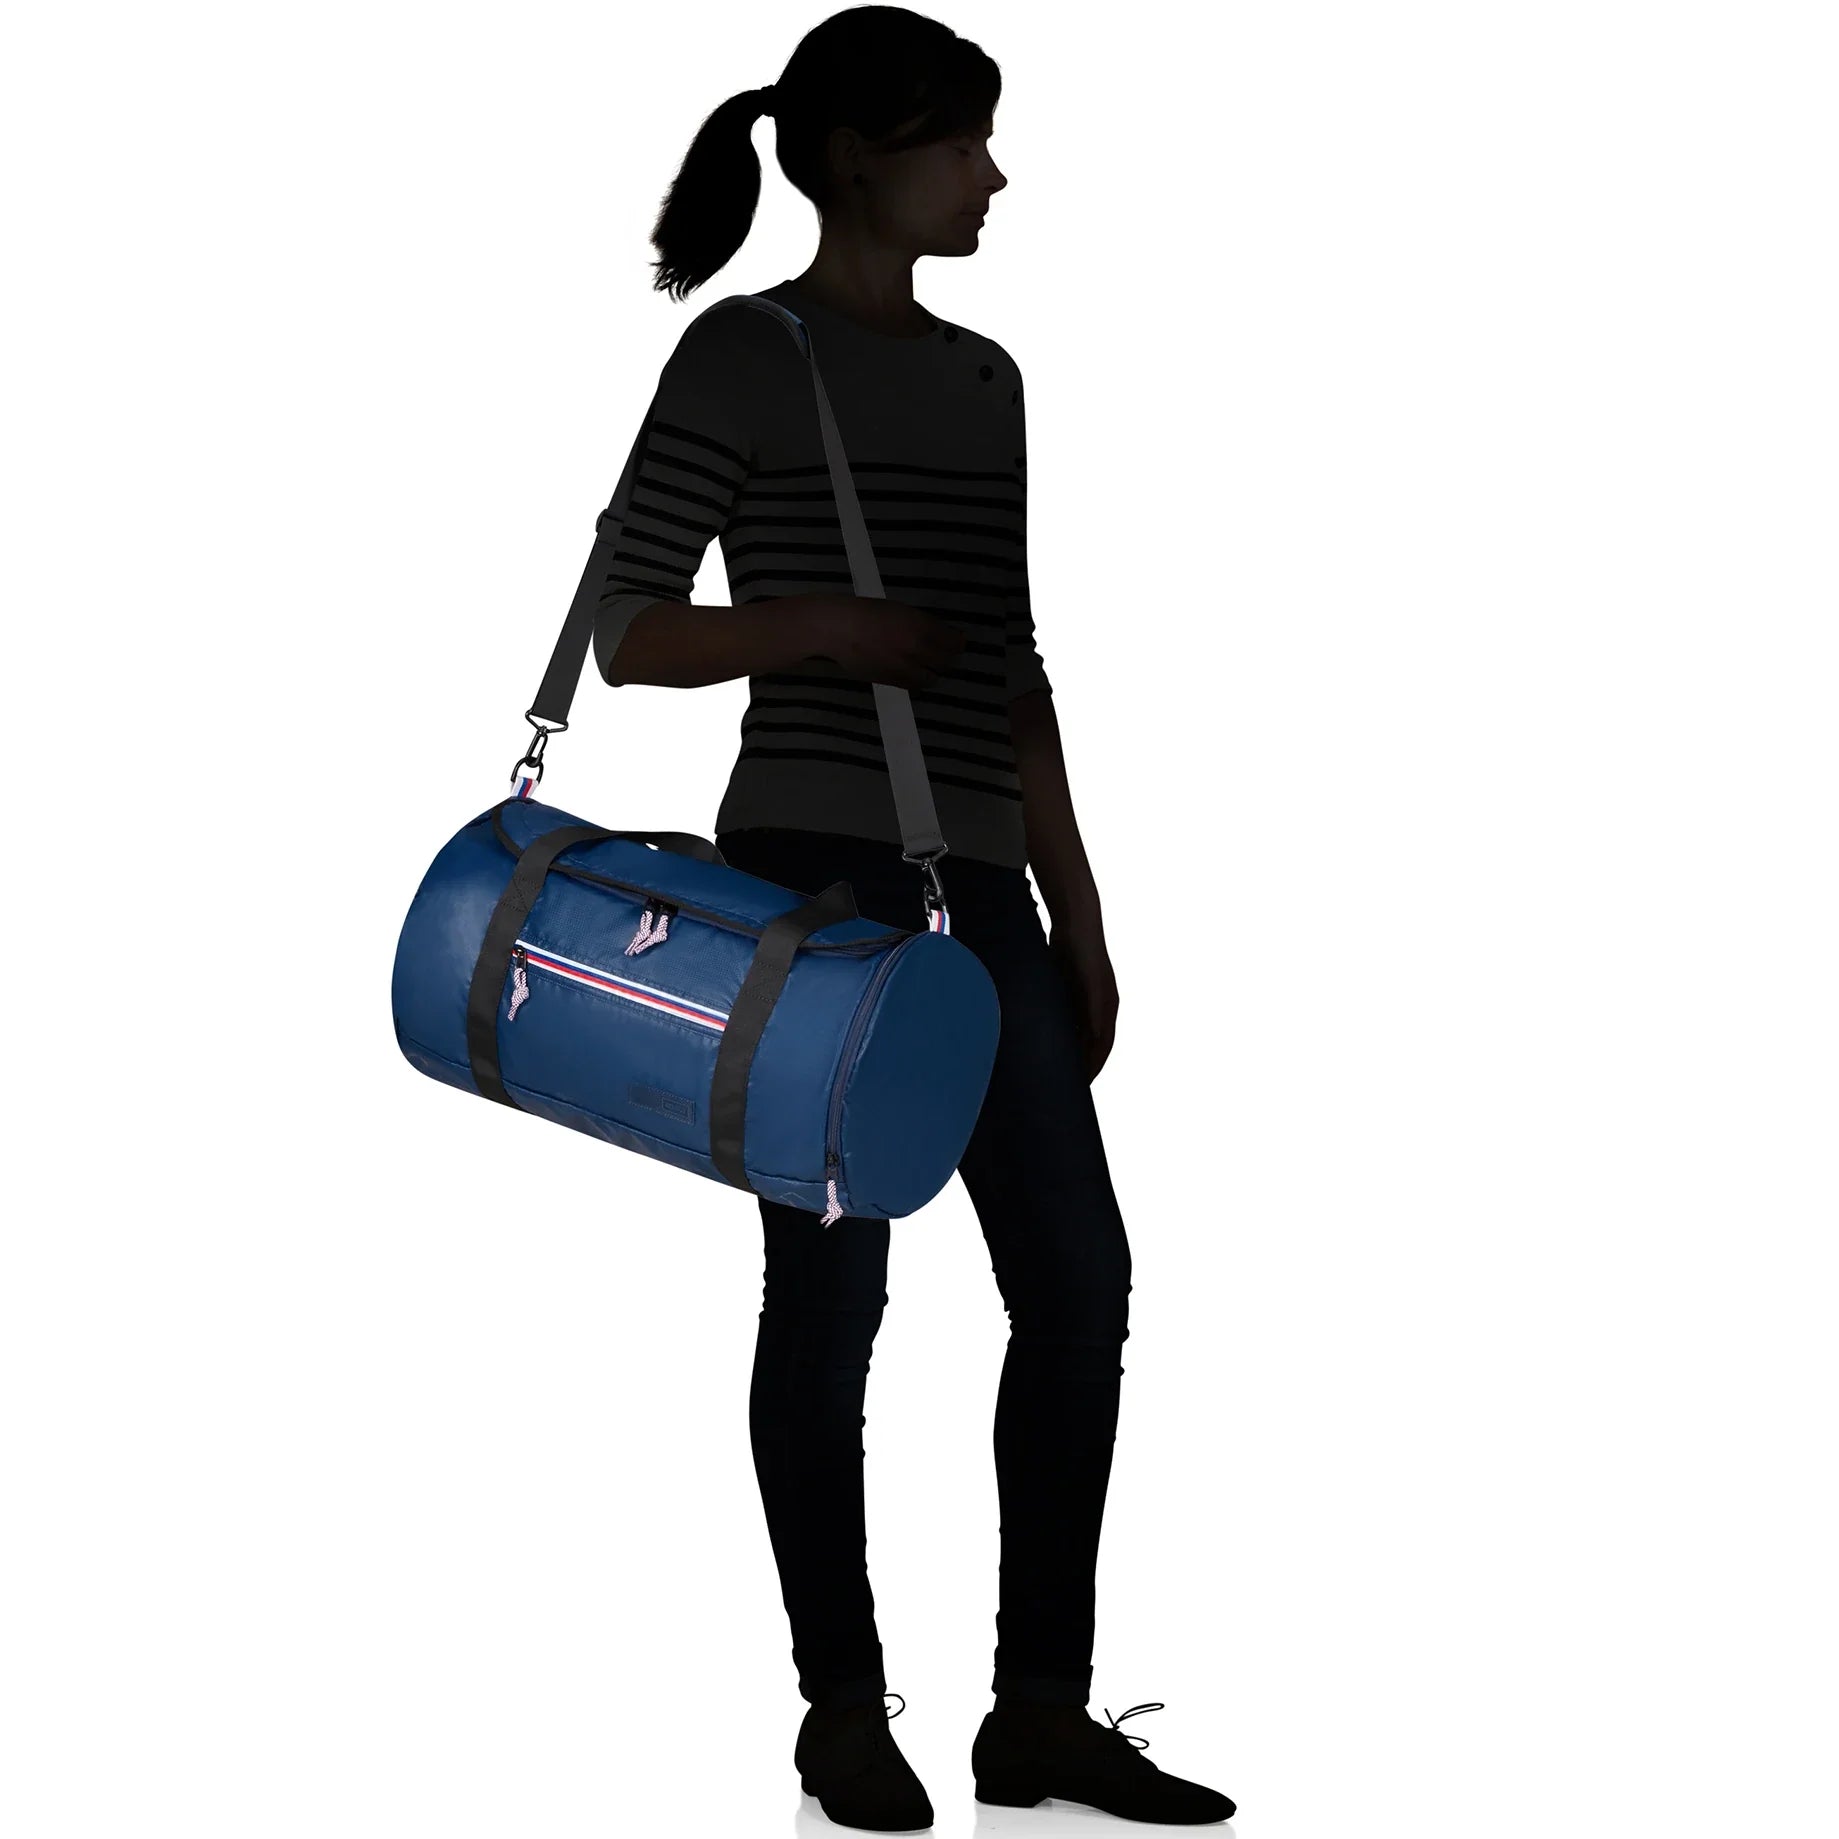 American Tourister Upbeat Pro coated travel bag 55 cm - Black